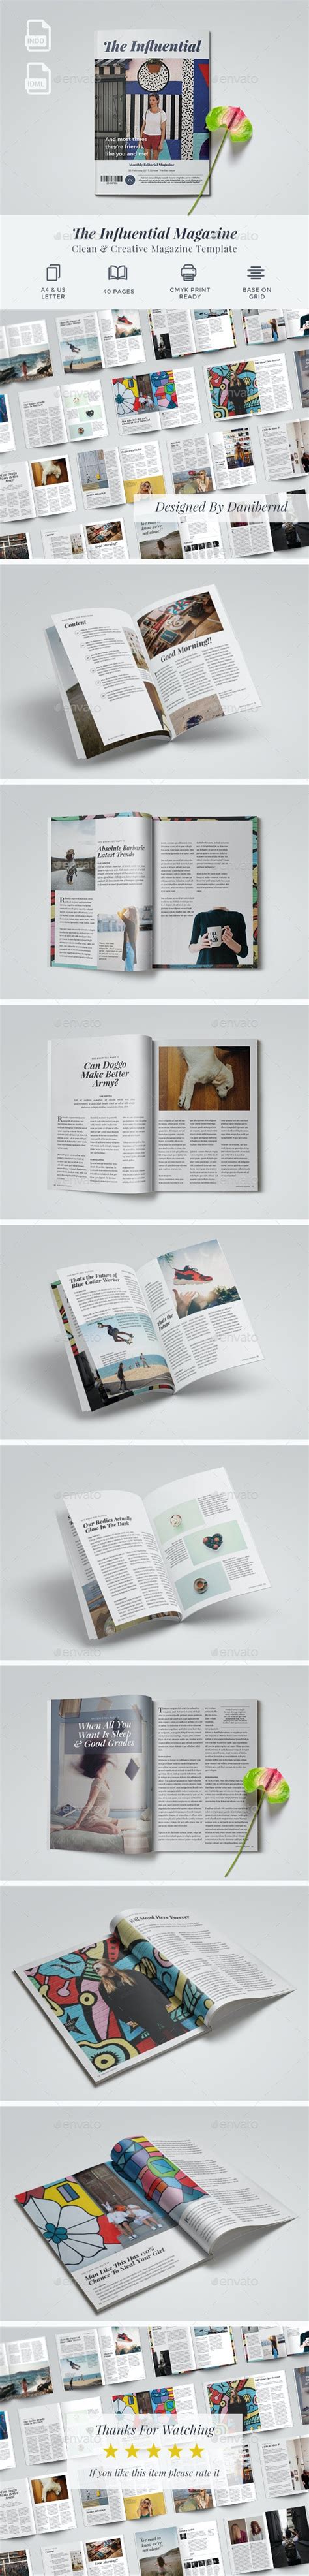 The Influential Magazine Print Templates Graphicriver